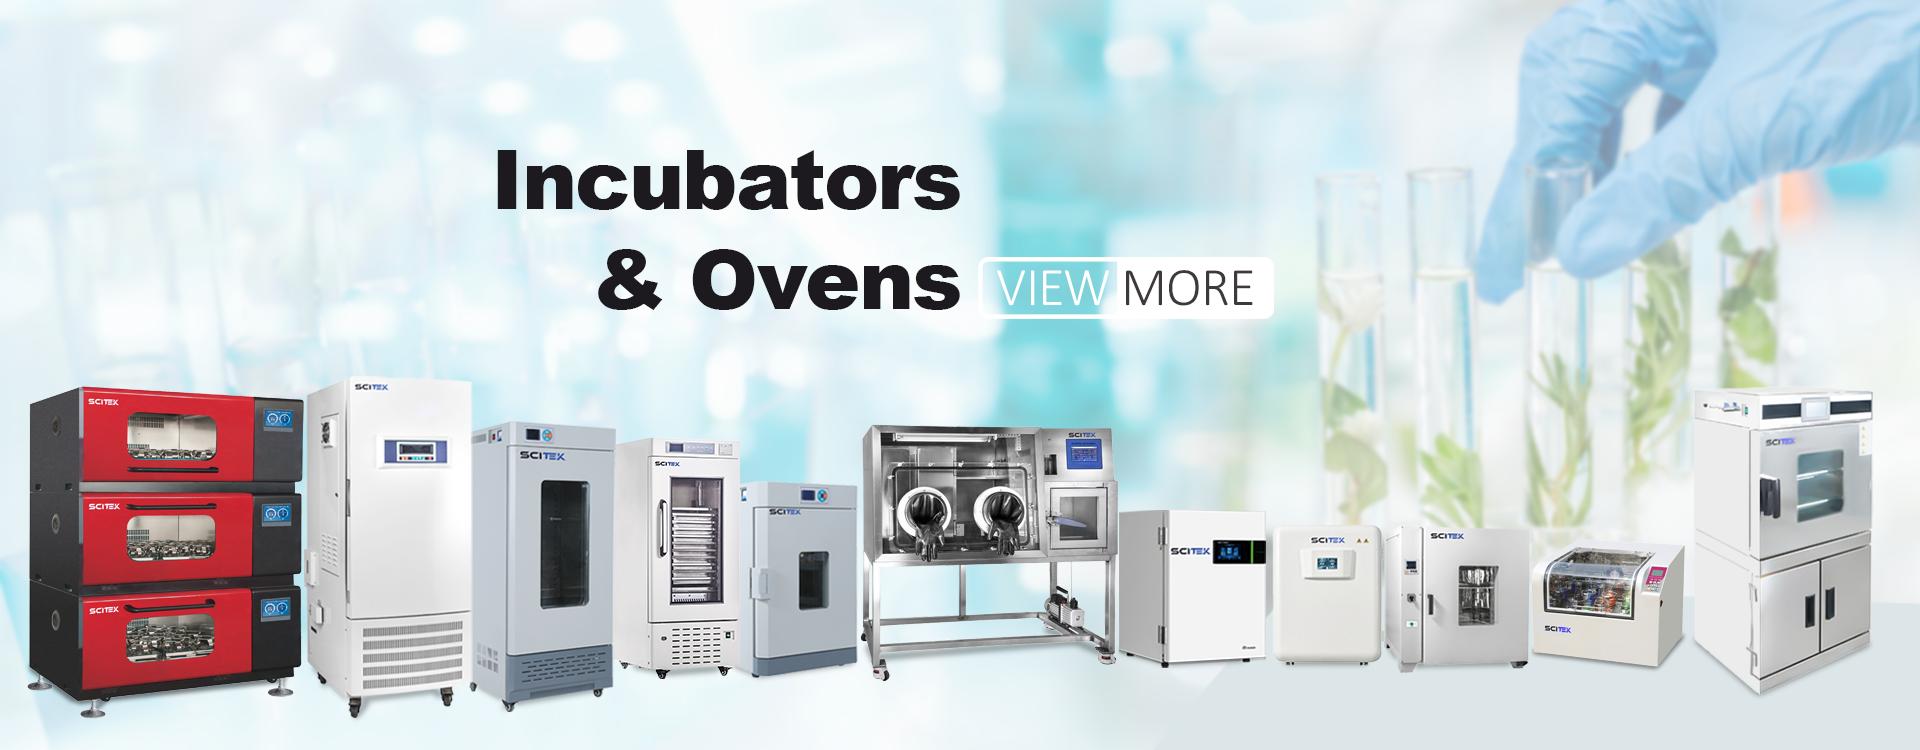 Incubators & Ovens Version2